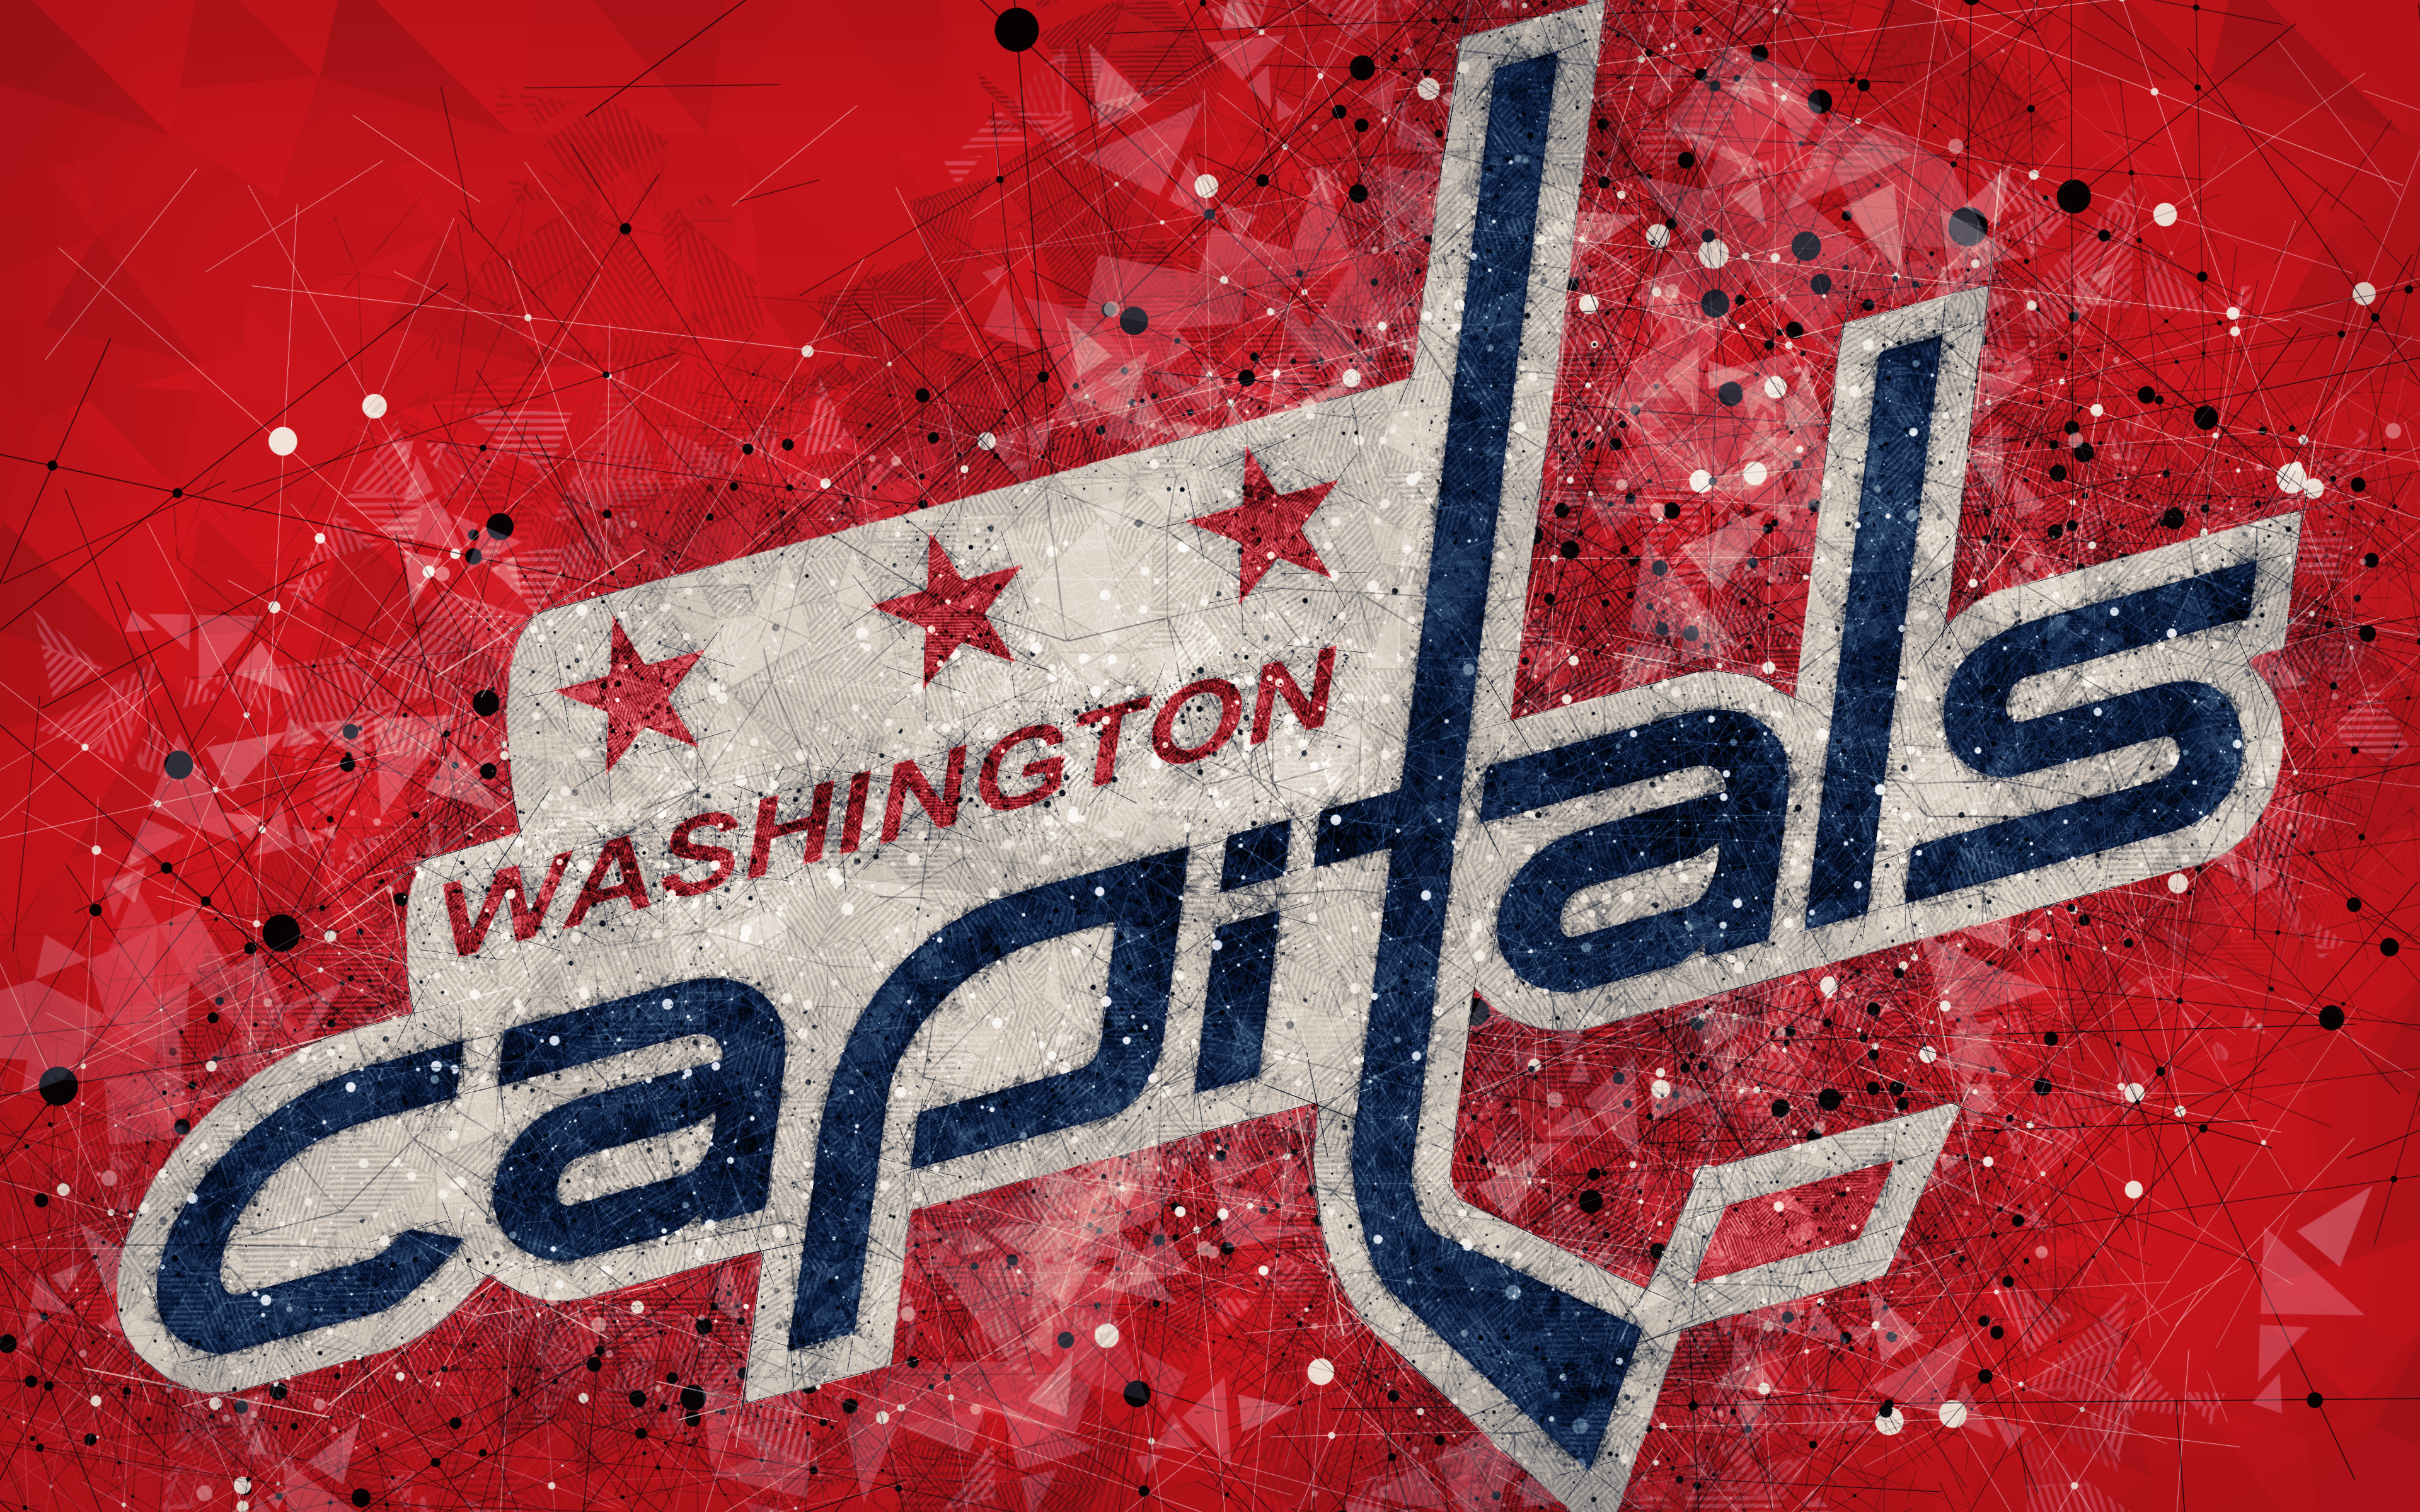 sports, washington capitals, emblem, logo, nhl, hockey